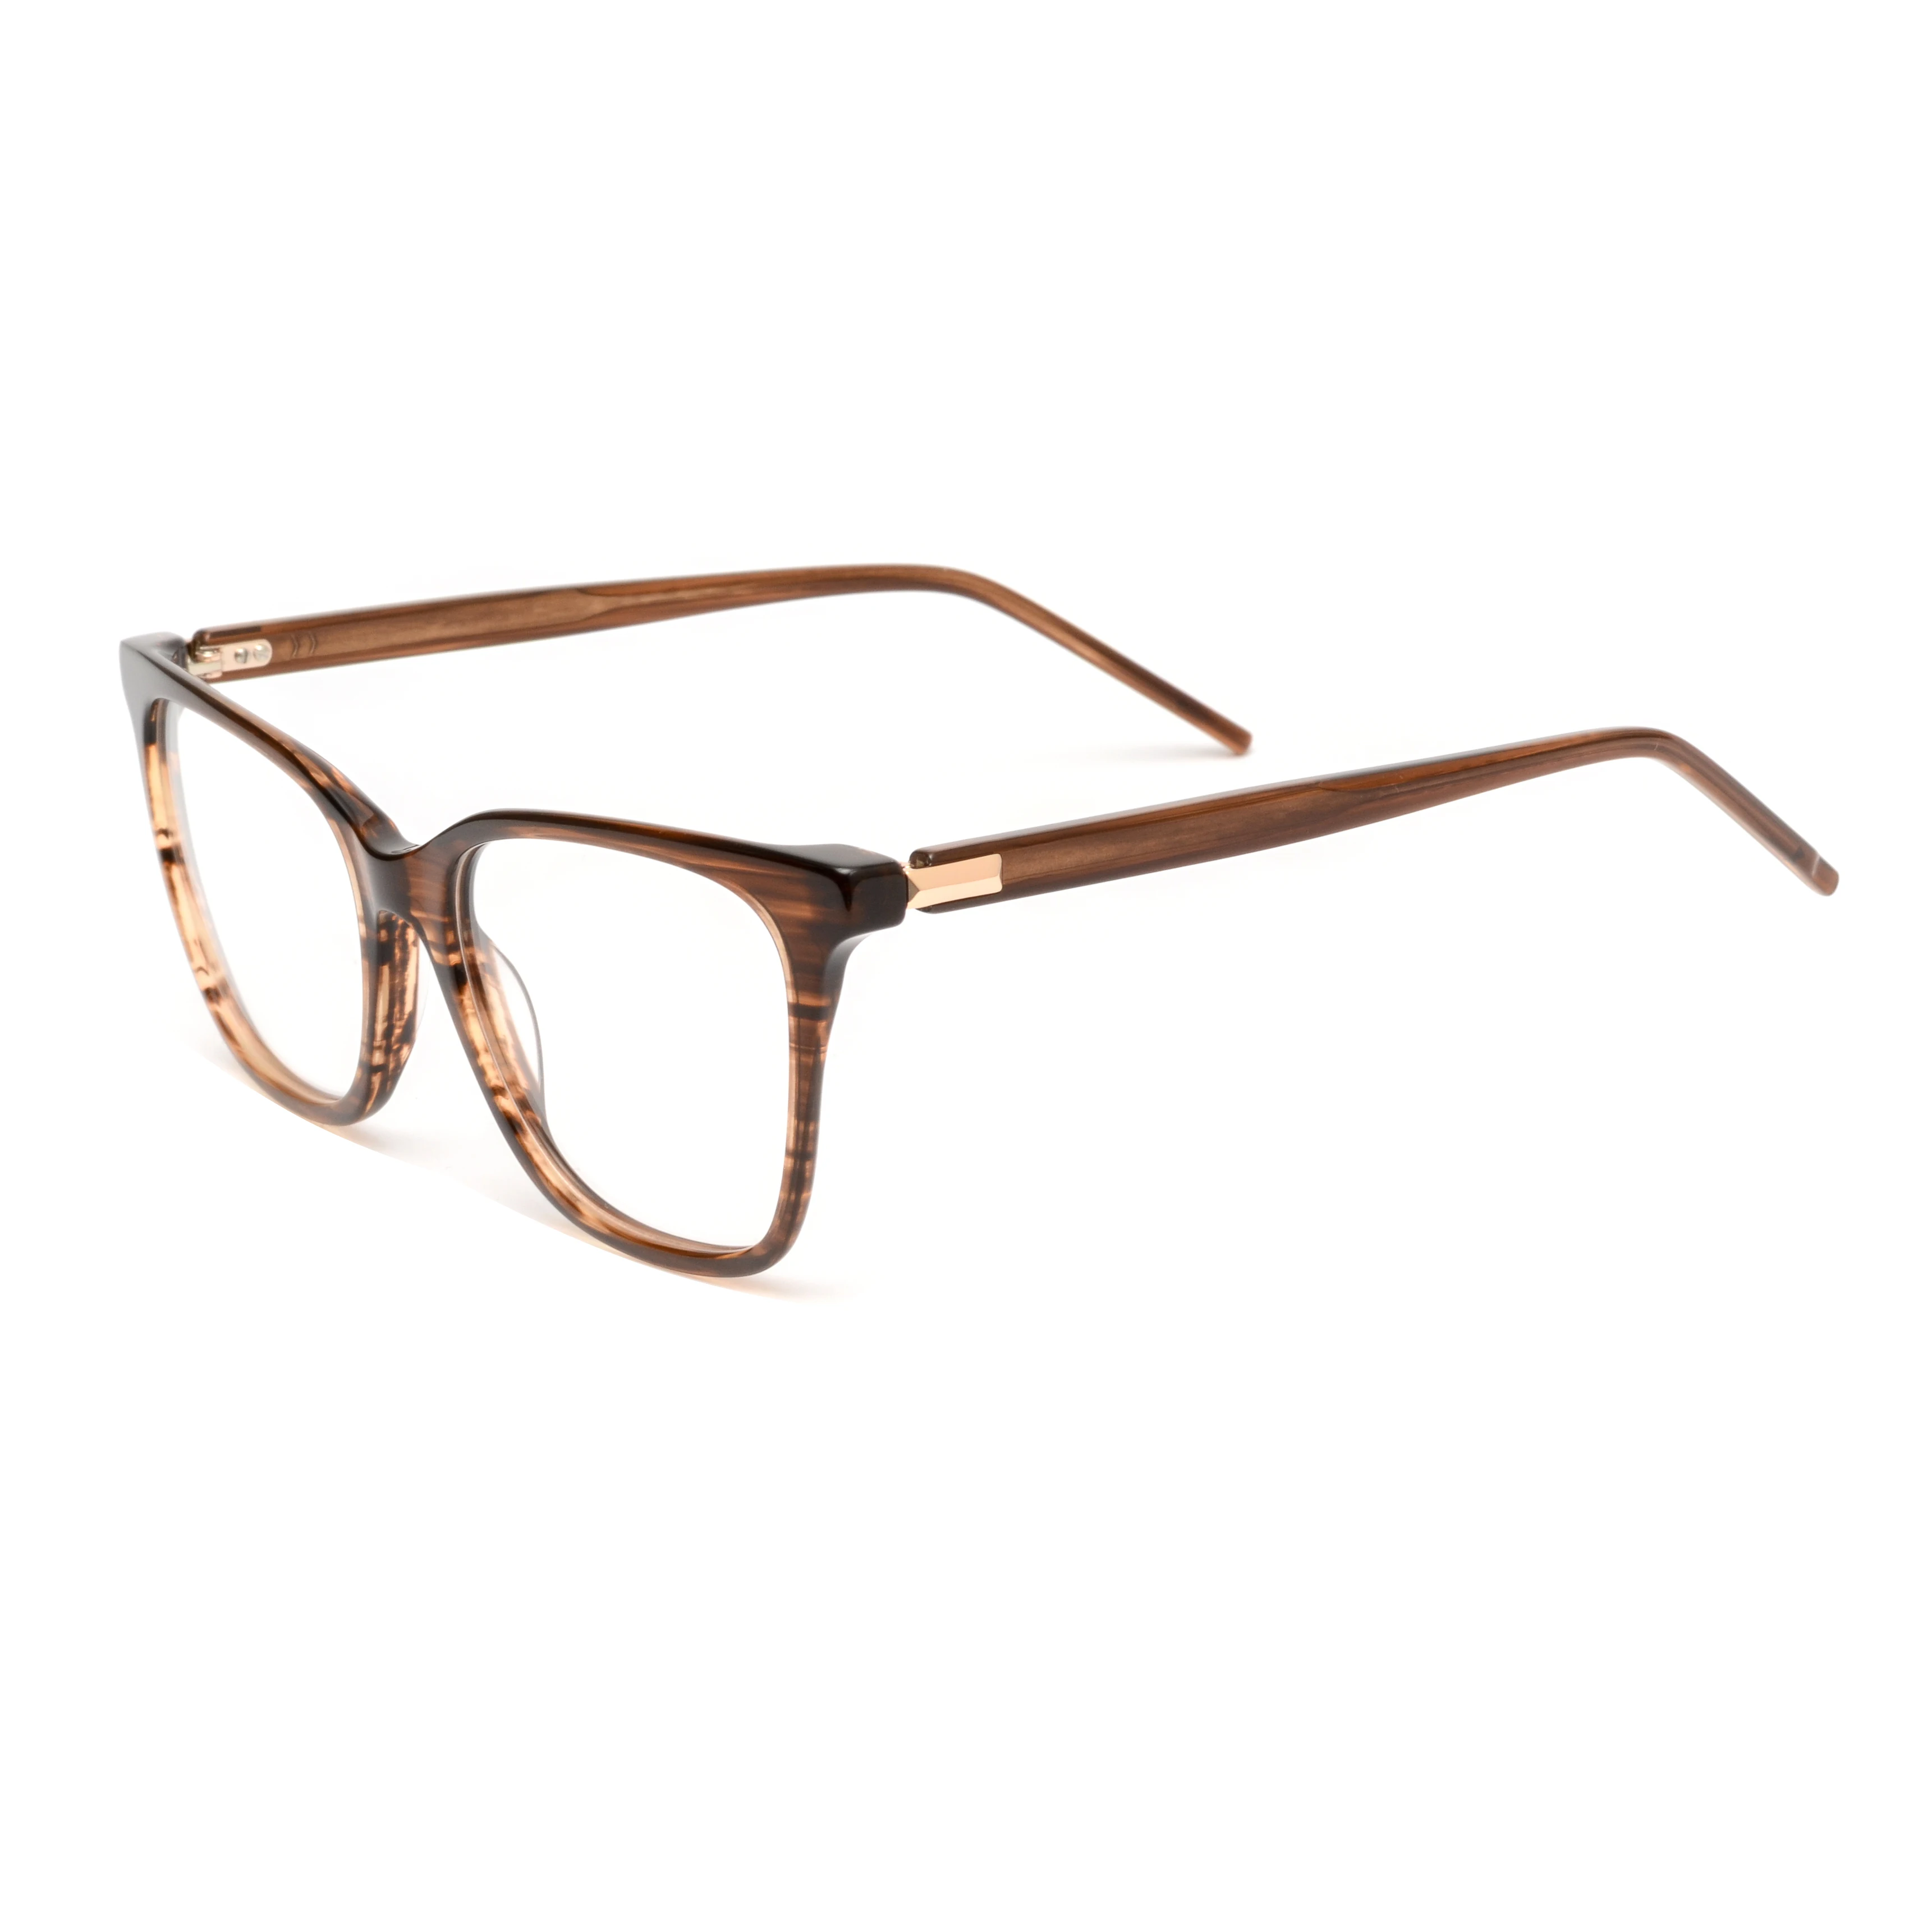 

1063 Eyewear Optical Bright Color Glasses Frames Acetate Eyeglass Frame Korea, As picture or custom colors